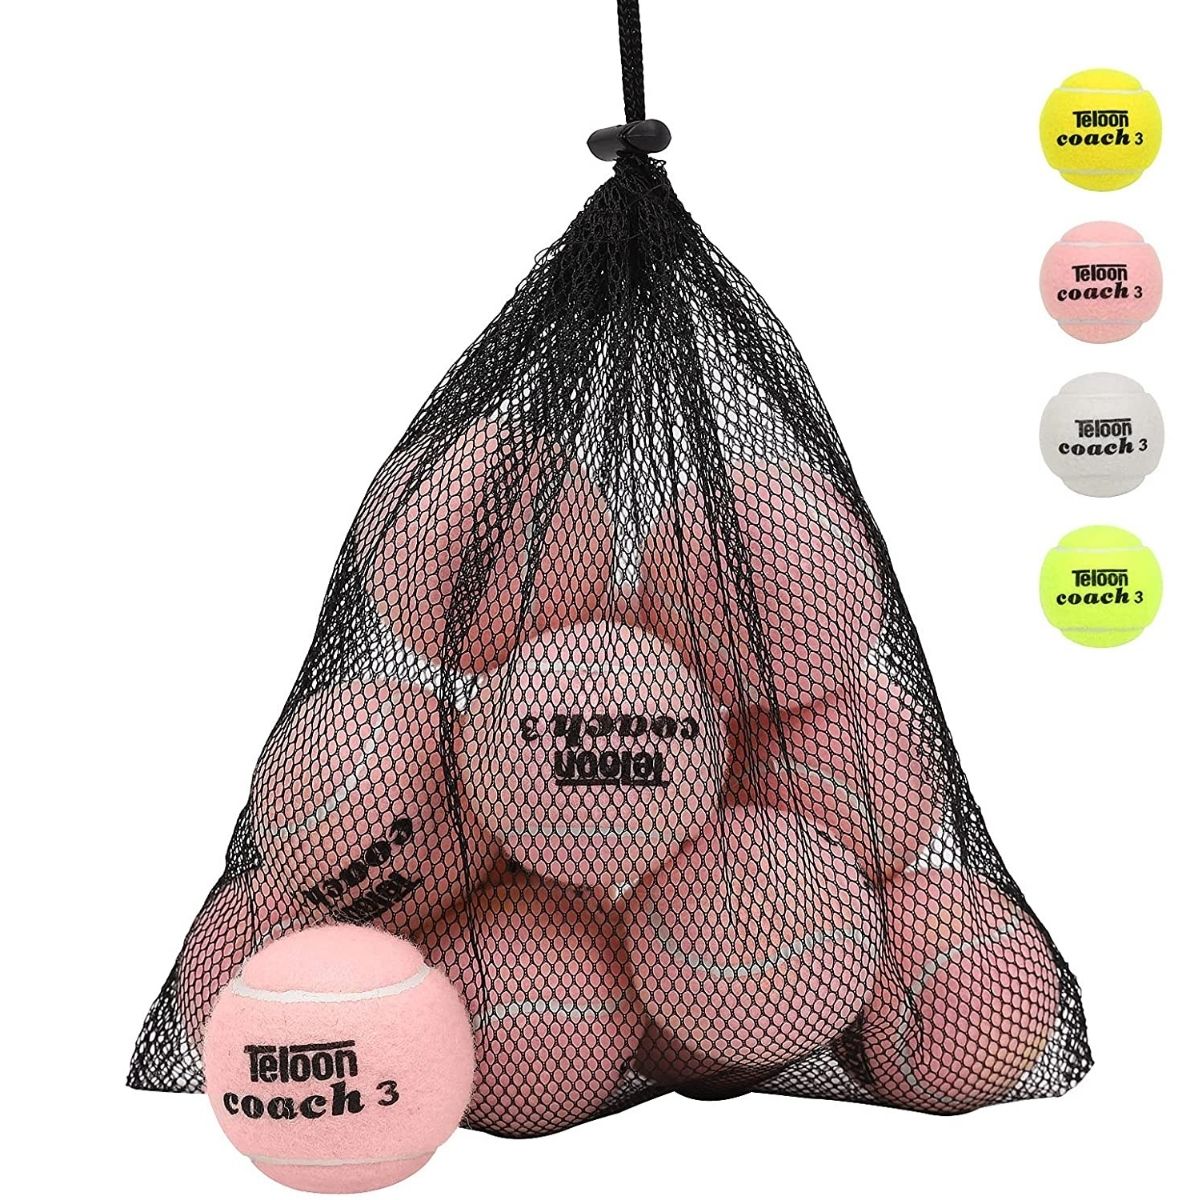 The Best Pressureless Tennis Balls Option: Teloon Pressure Training Tennis Balls